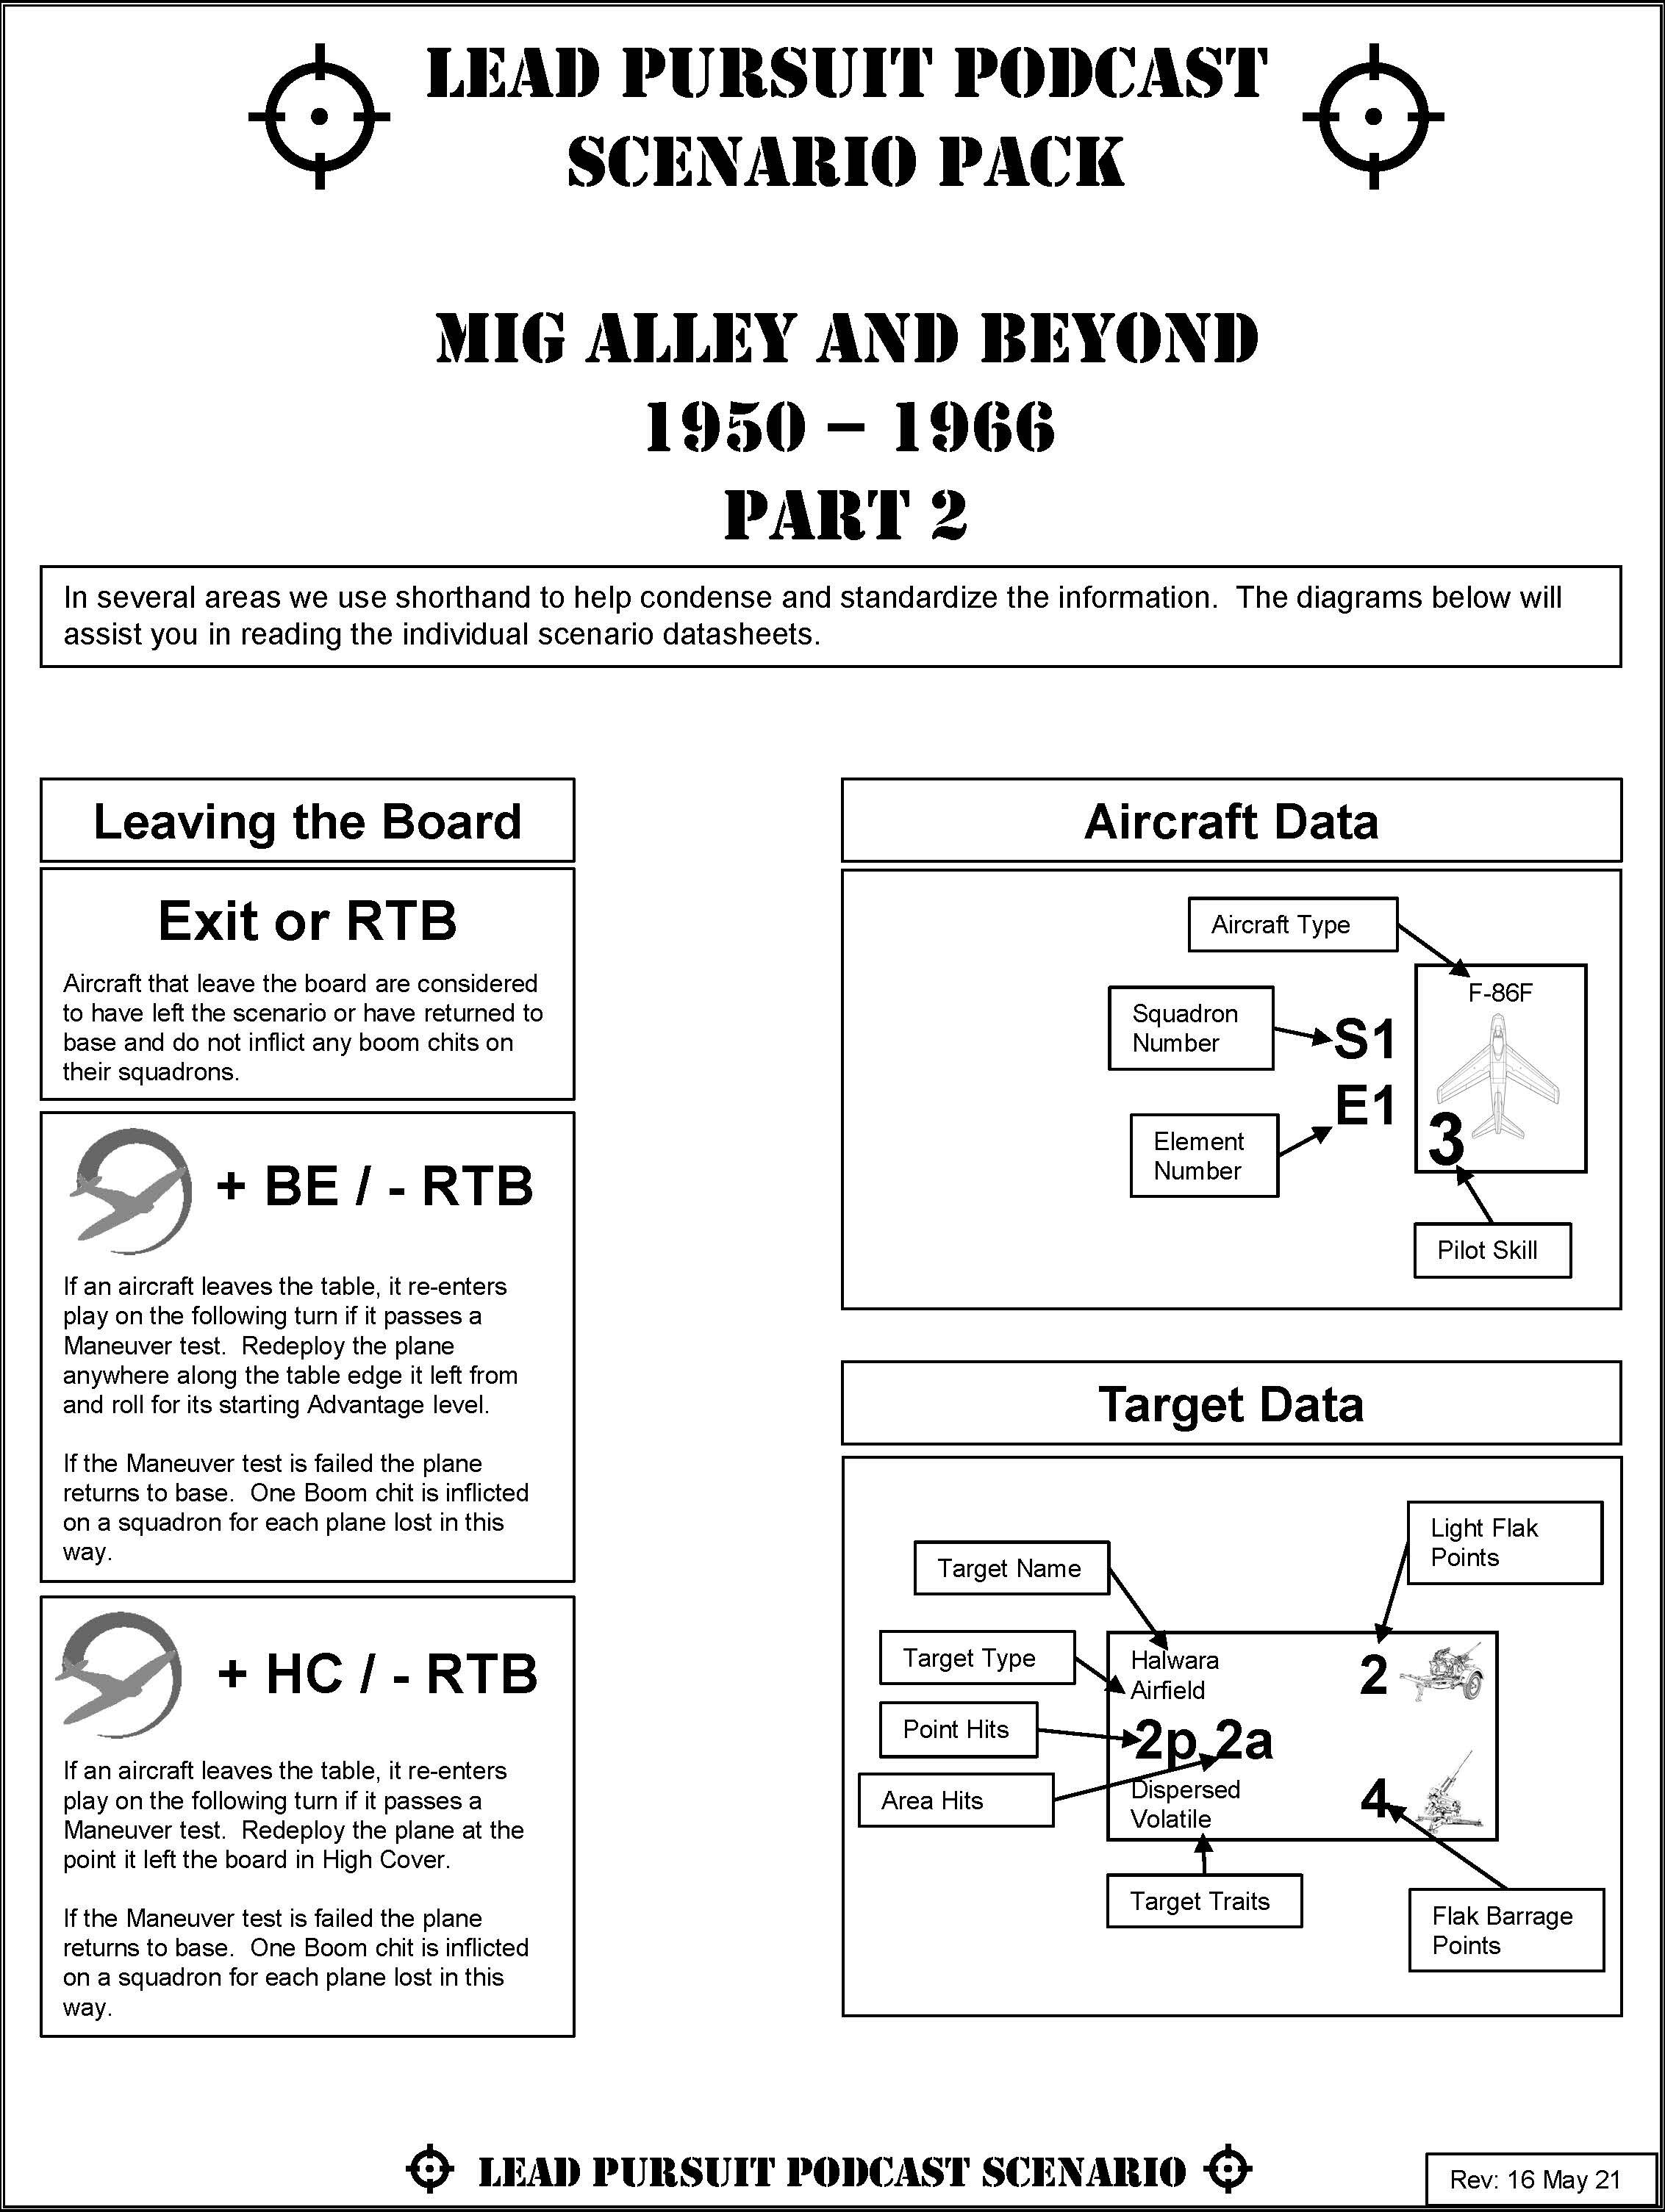 Beyond MiG Alley Part 2.jpg